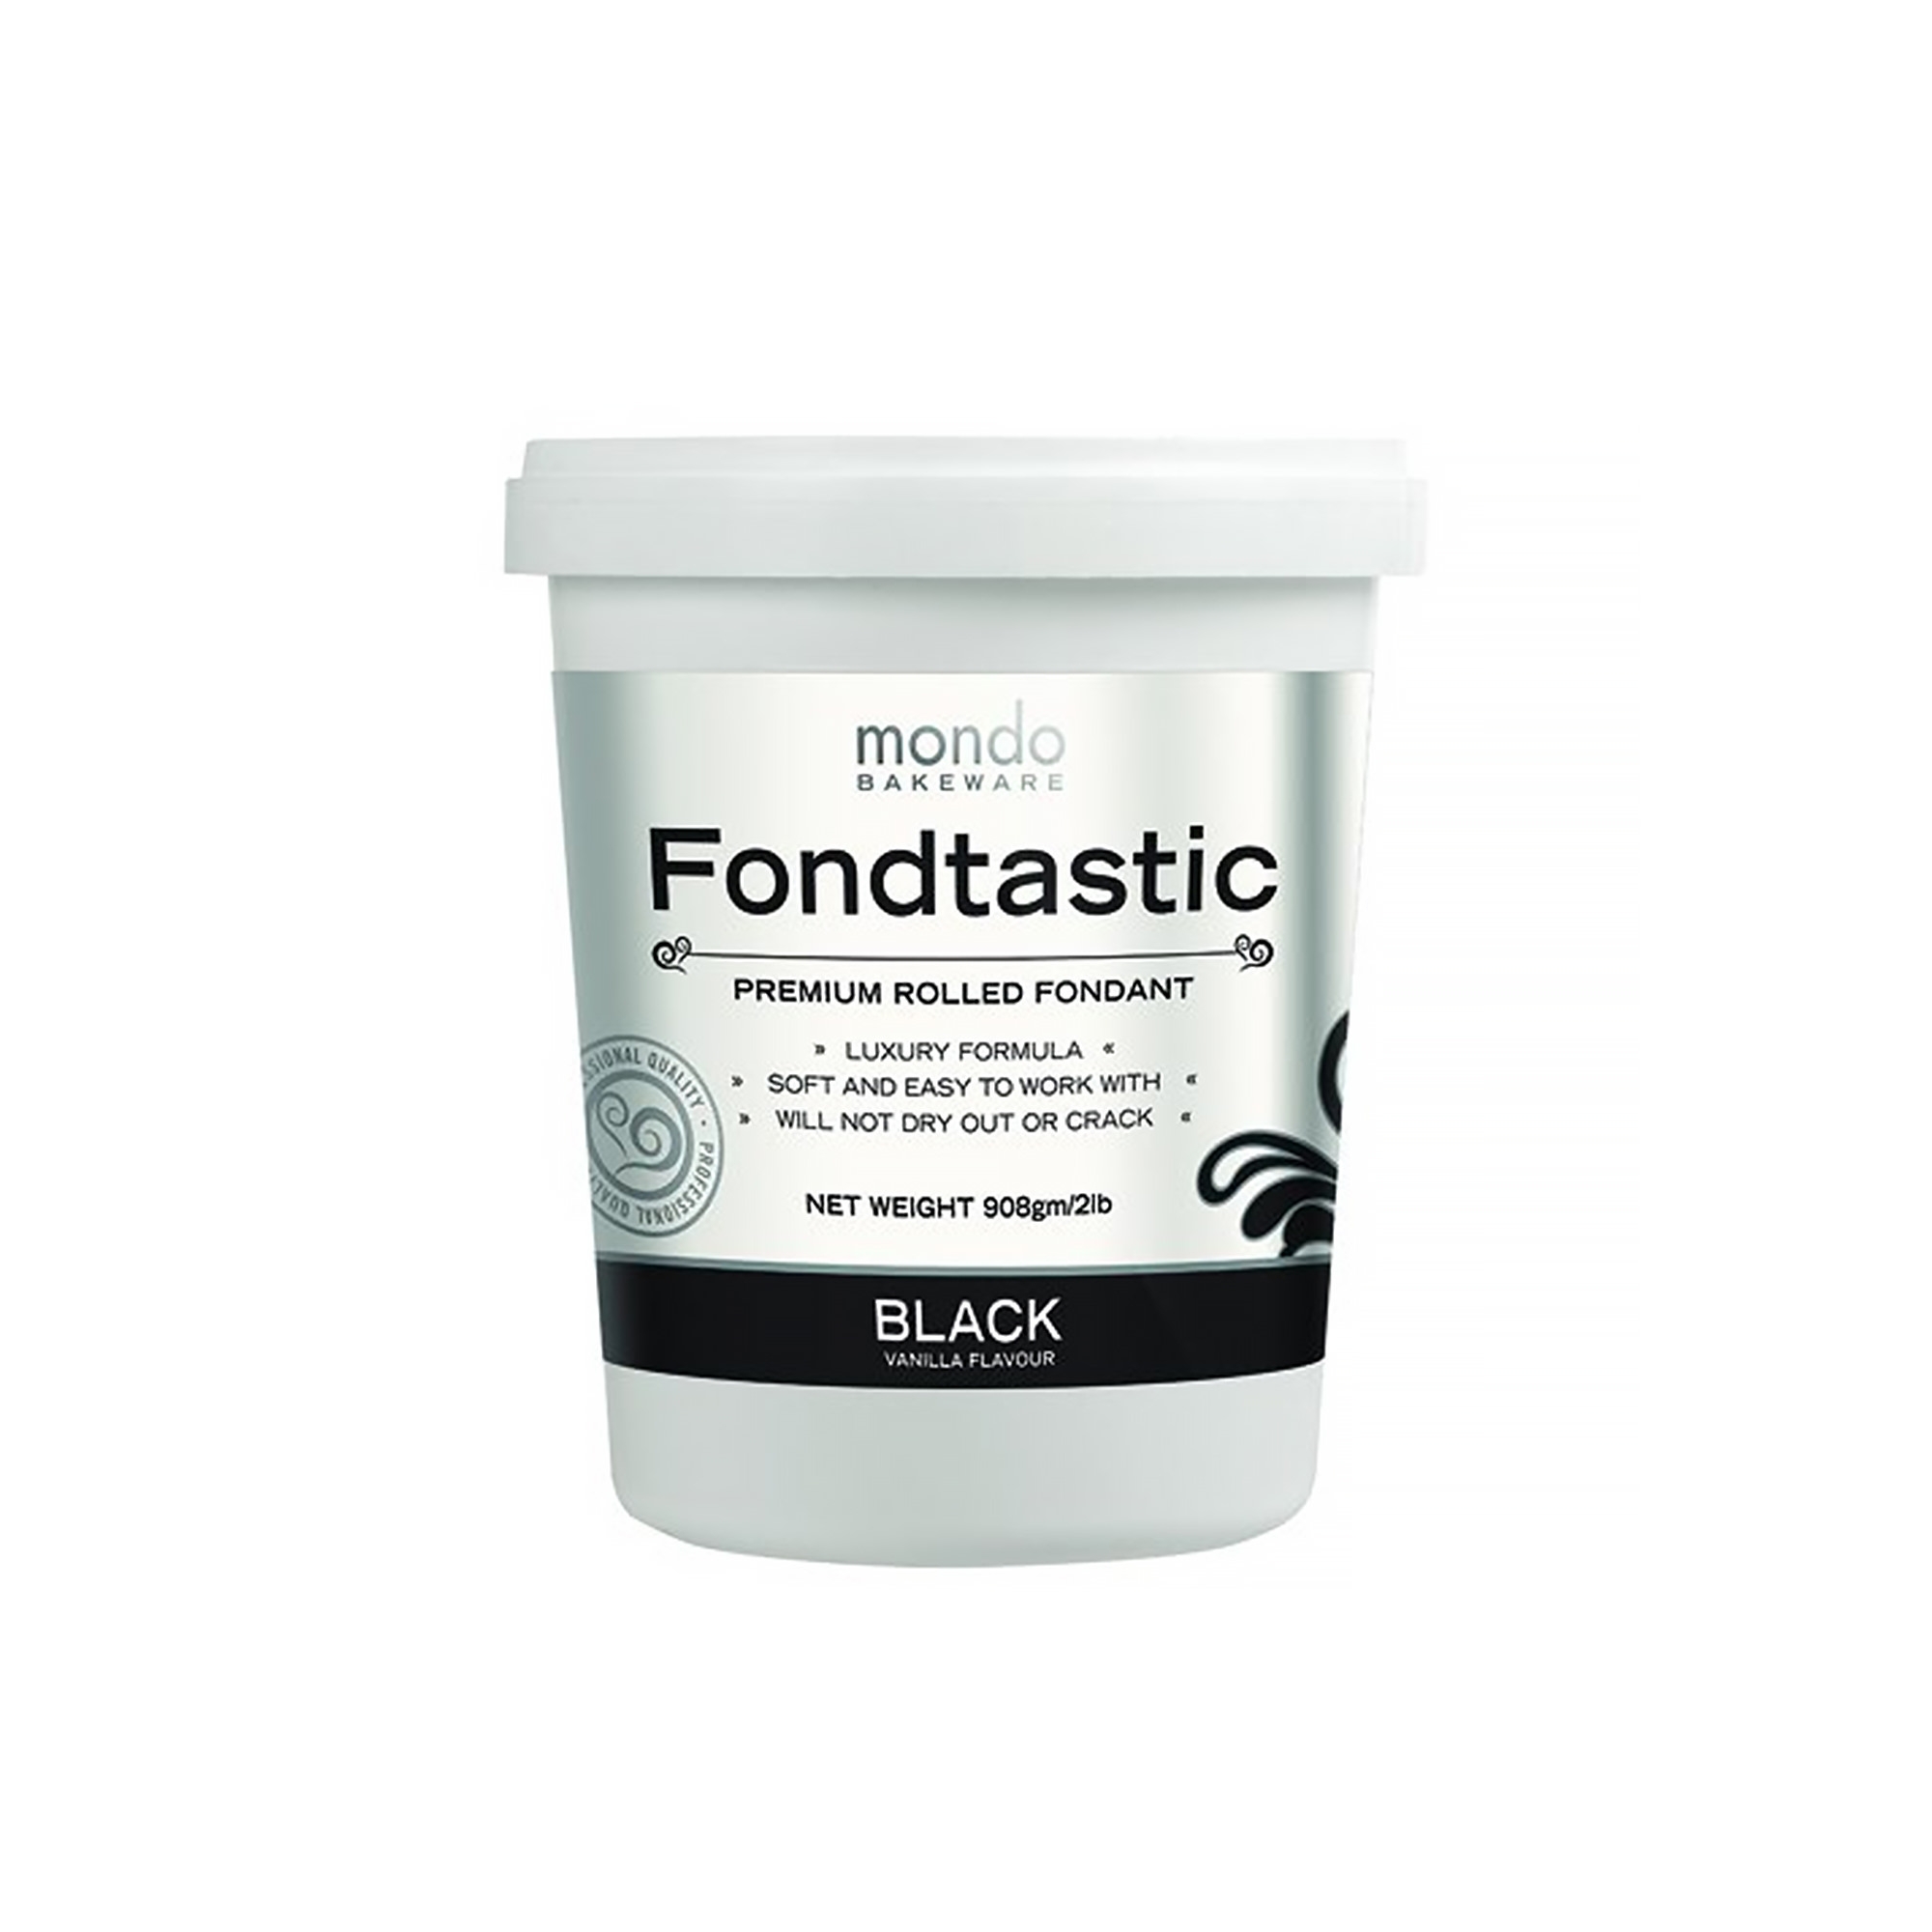 Fondtastic Premium Rolled Fondant Black 908g Image 1